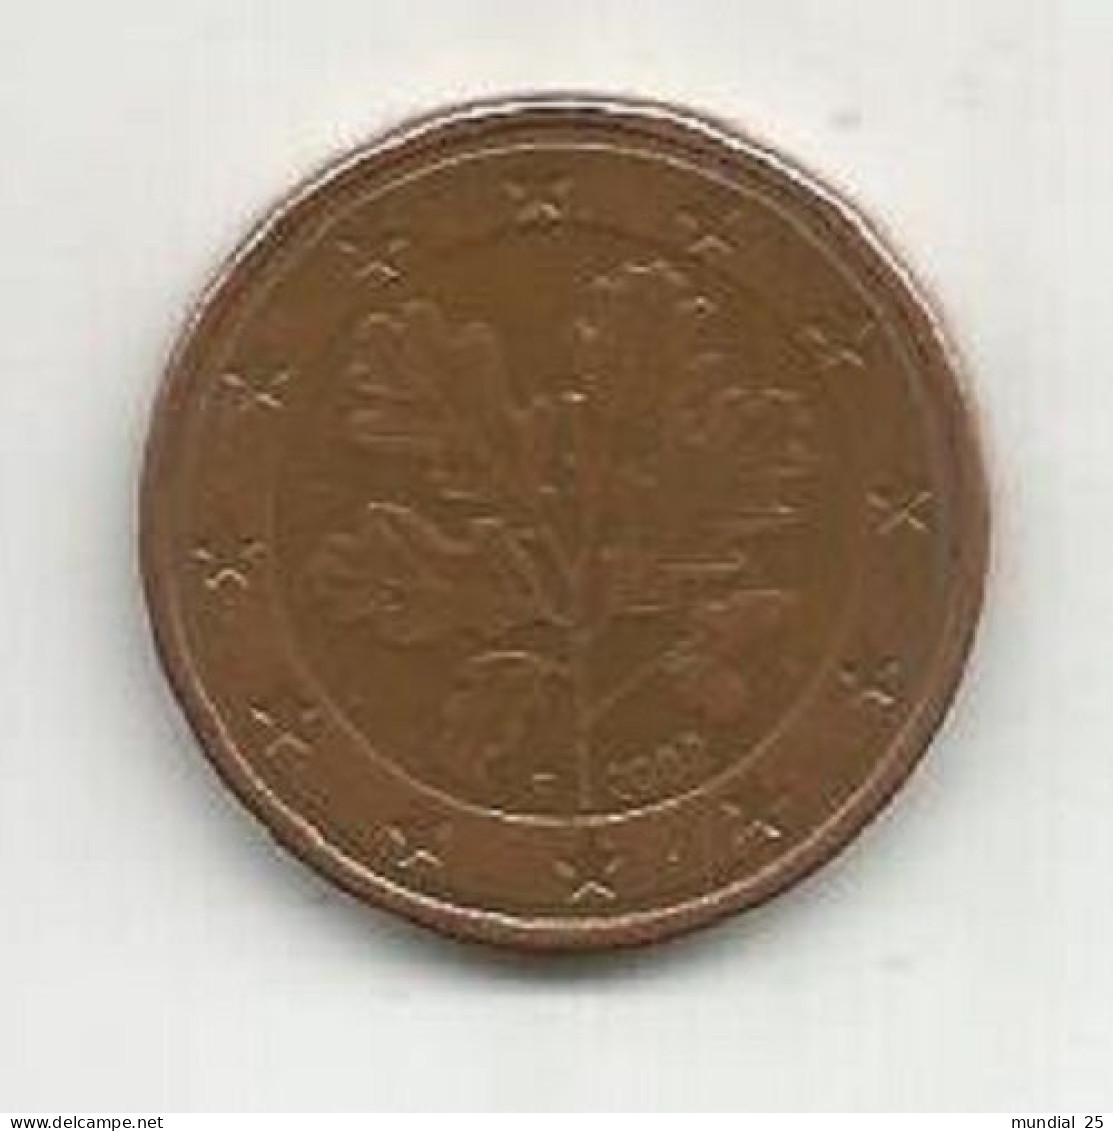 GERMANY 5 EURO CENT 2002 (F) - Alemania